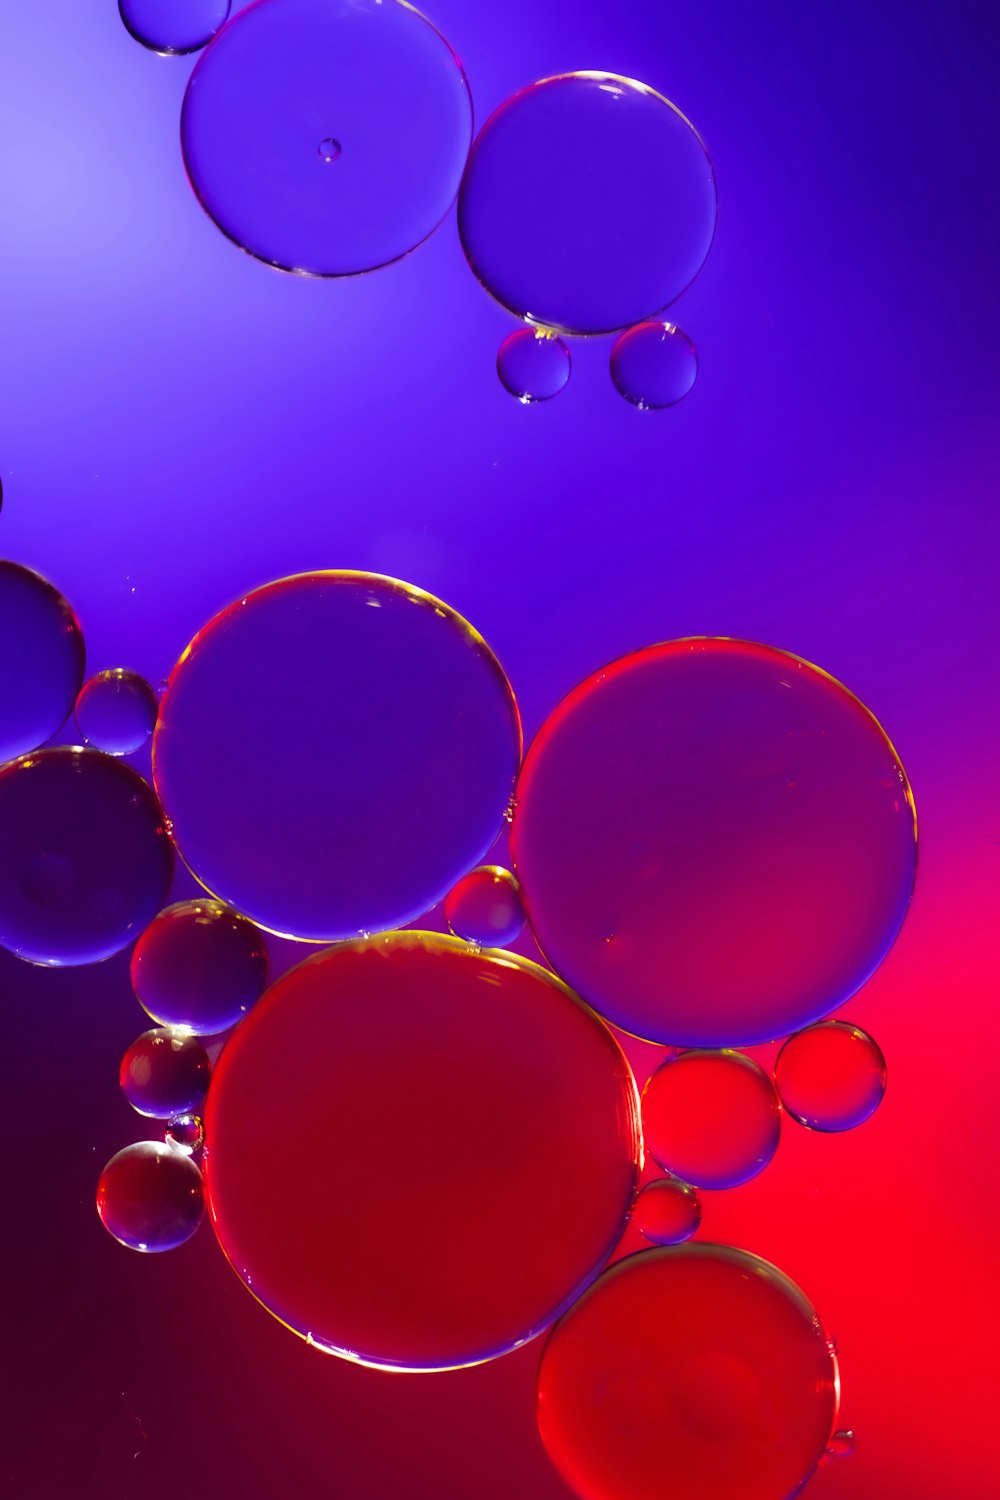 Bubbles Wallpaper Pictures | Download Free Images on Unsplash